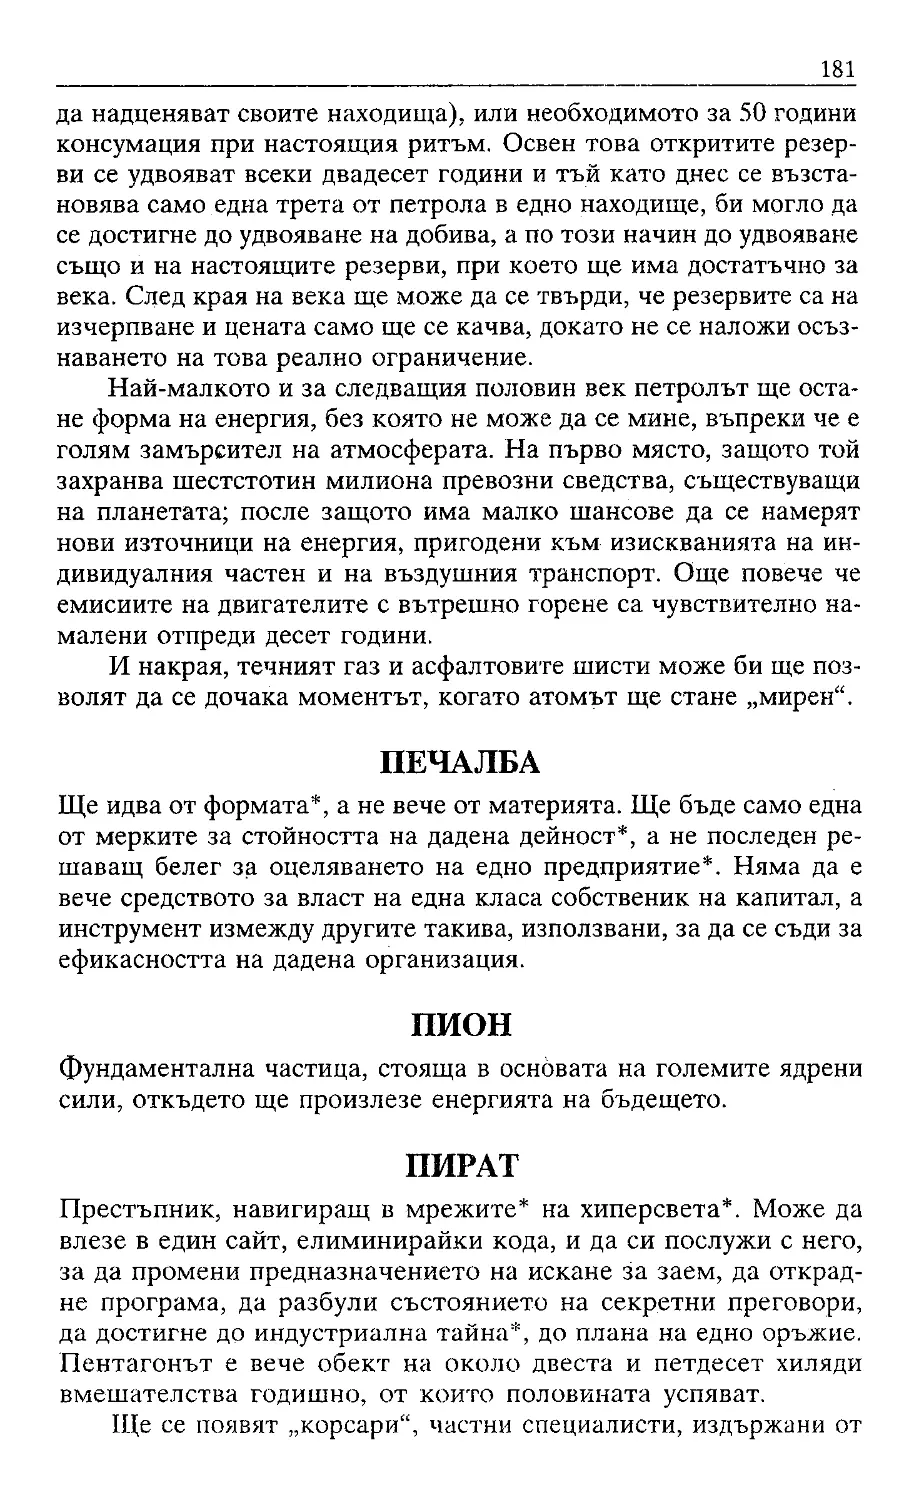 ﻿Жак Атали. Речник на 21 век_Page_089_Image_0001_2